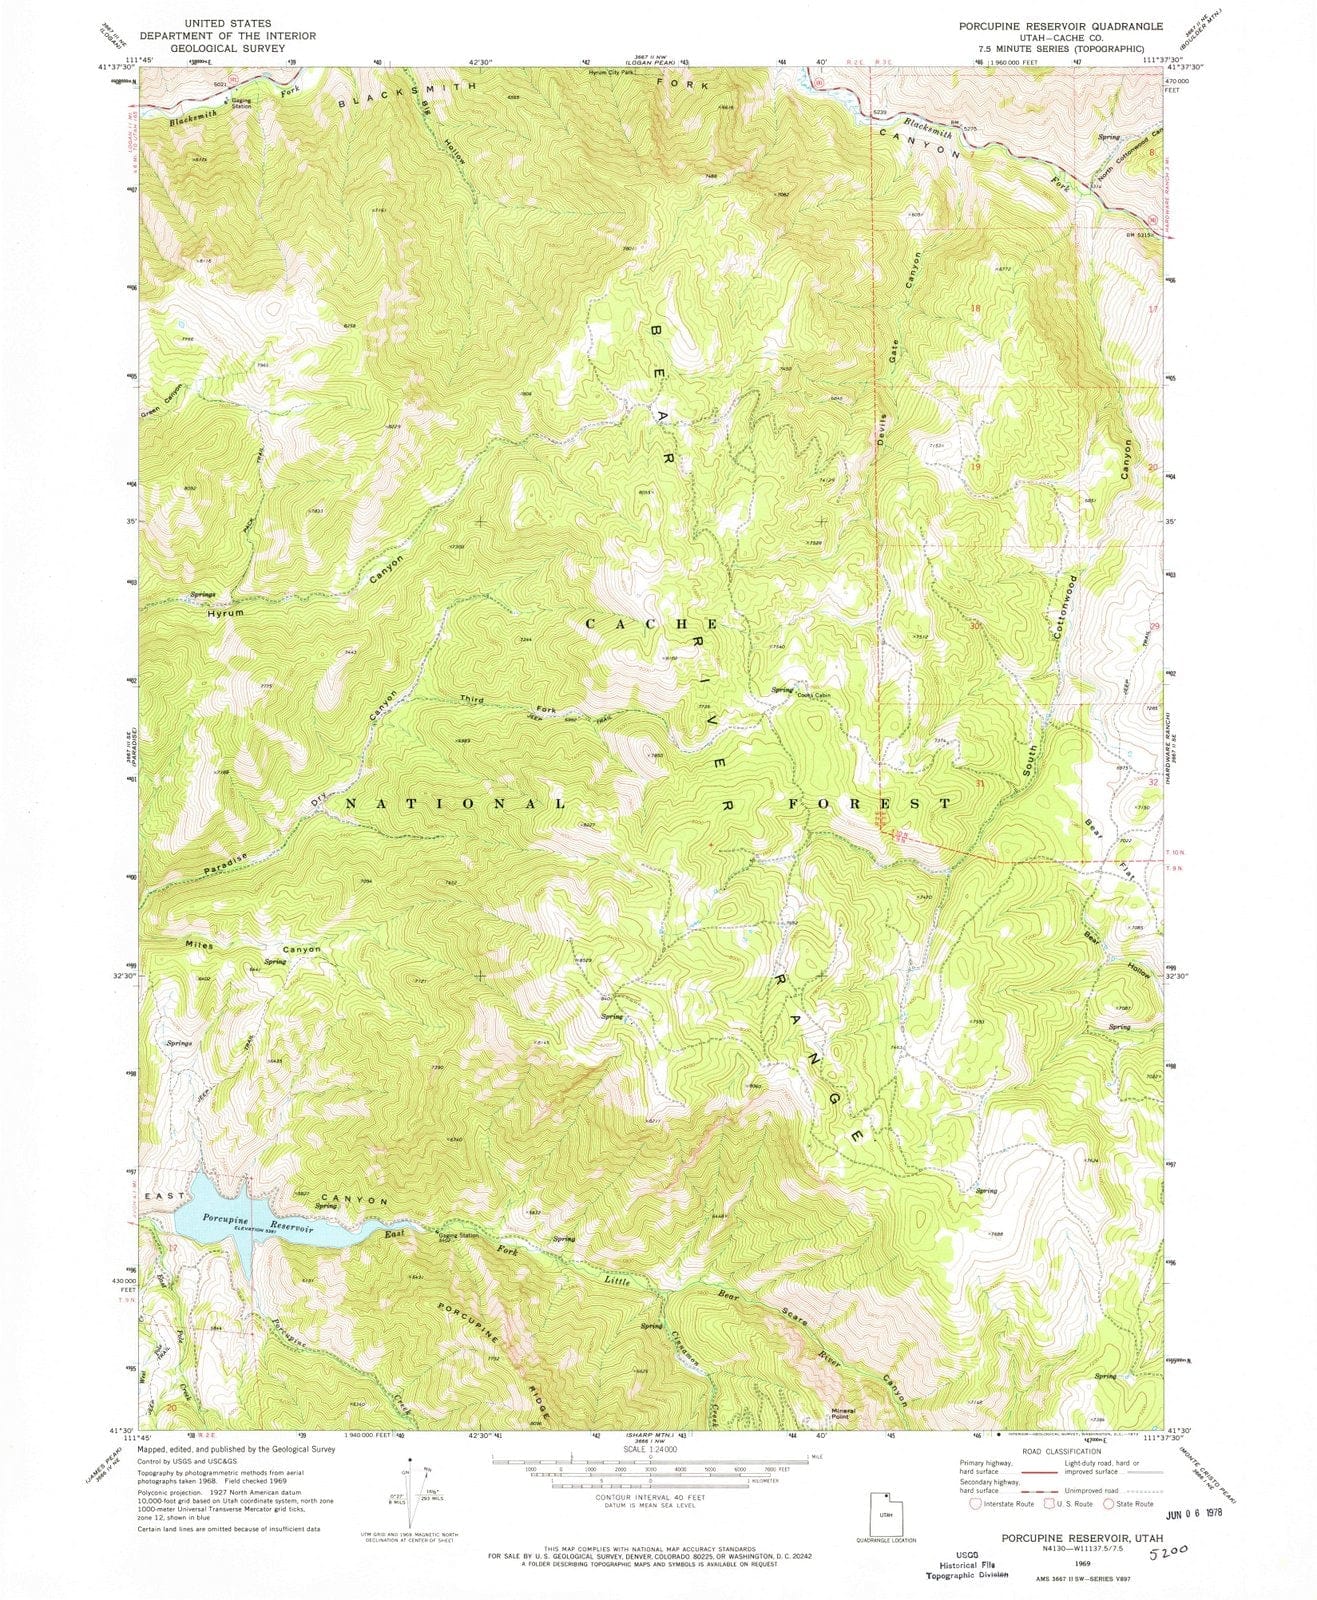 1969 Porcupine Reservoir, UT - Utah - USGS Topographic Map